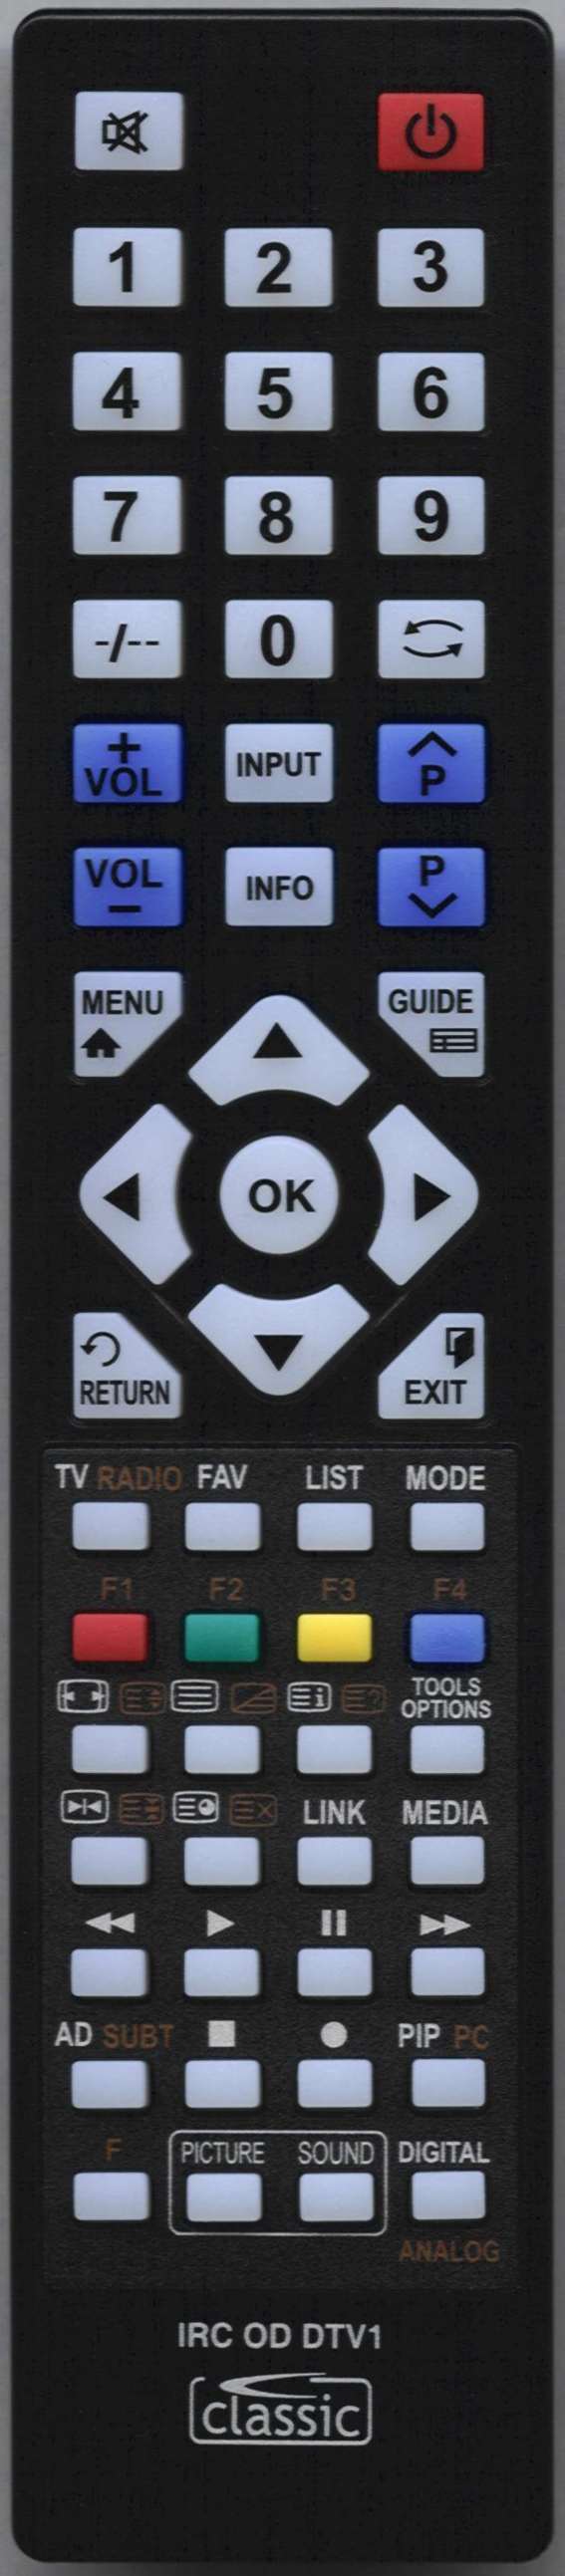 Sony KDL-40X2000 Remote Control